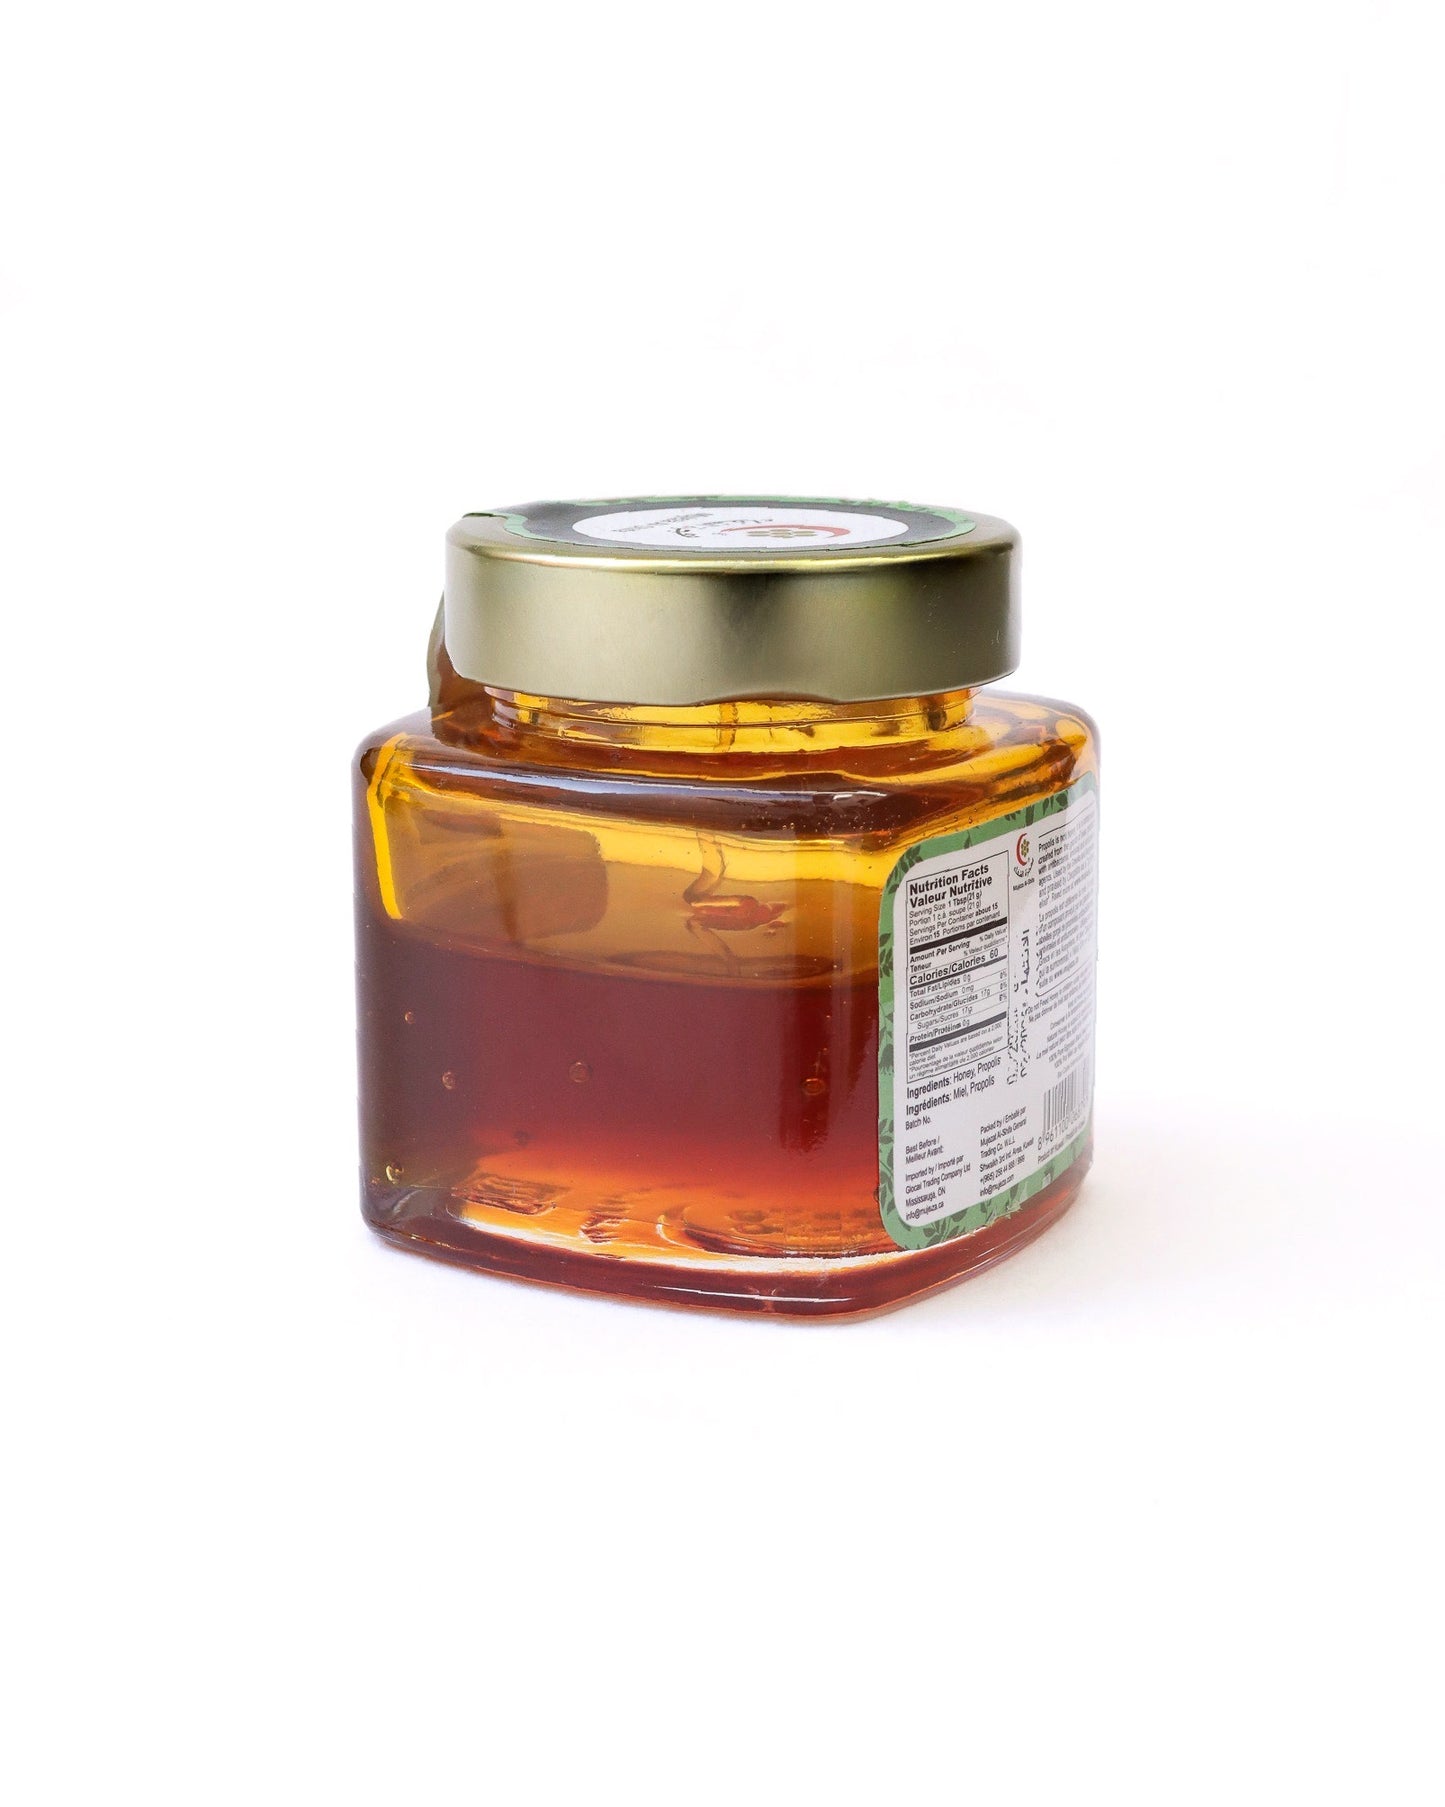 Green Propolis + Sidr Honey (250g/pc) - Mujeza Honey